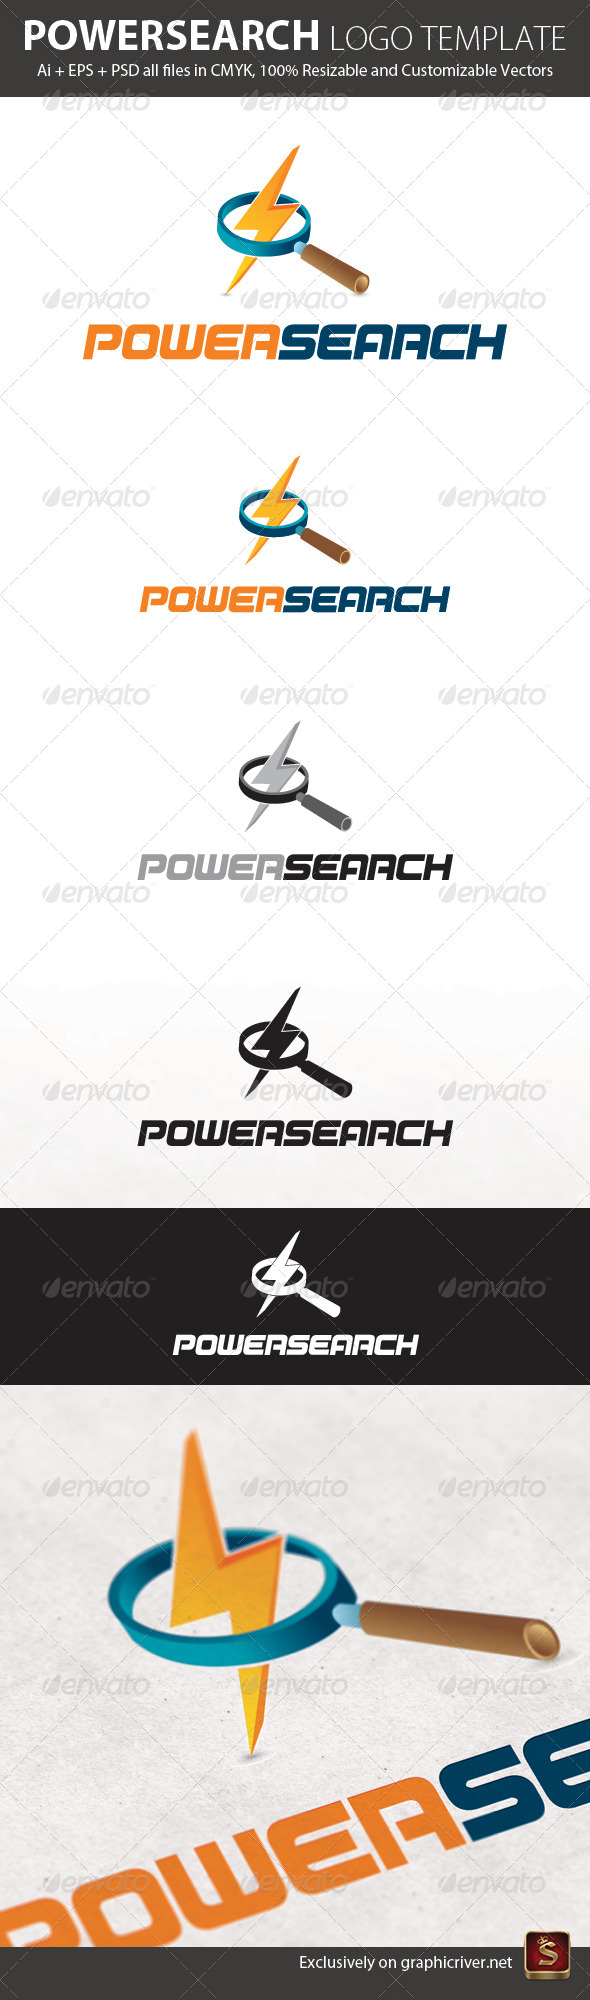 Powersearch Logo Template